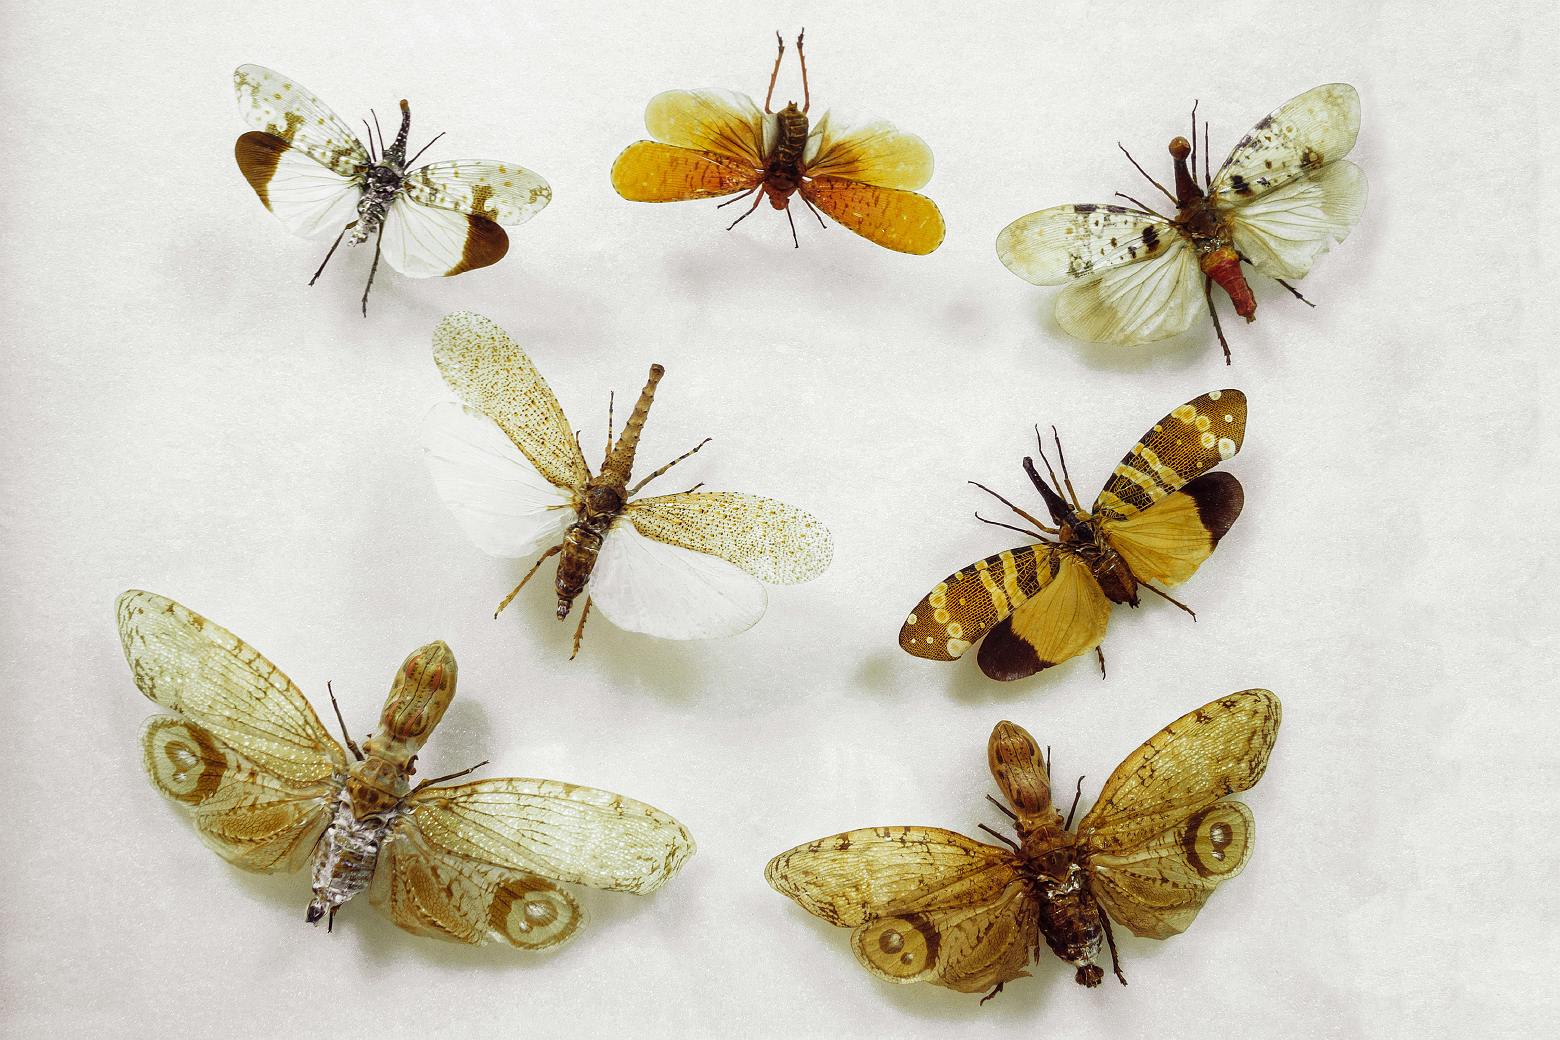 The Fascinating Life of Lantern Bugs